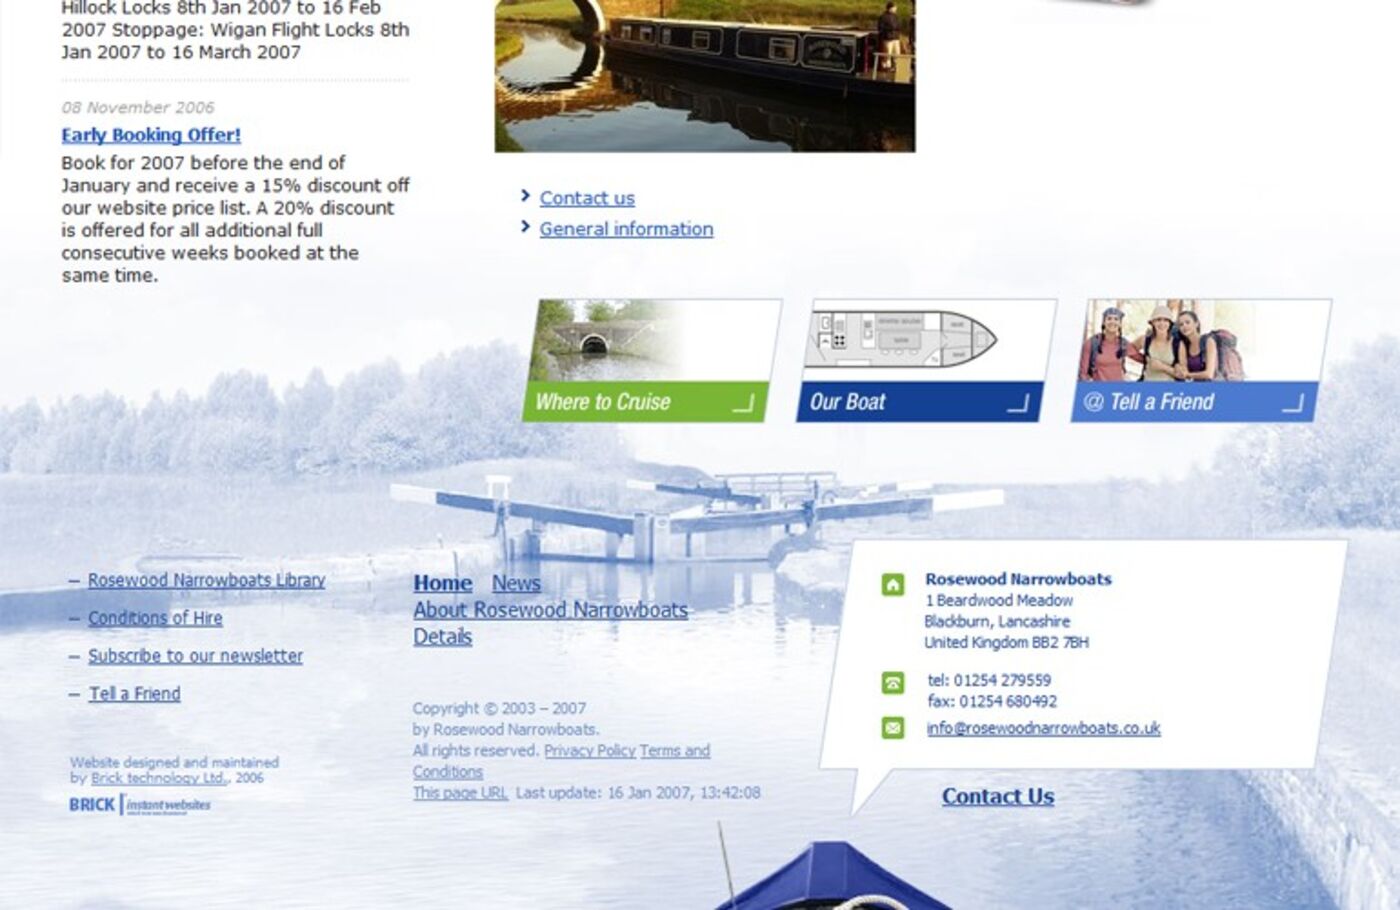 Rosewood Narrowboats Homepage footer